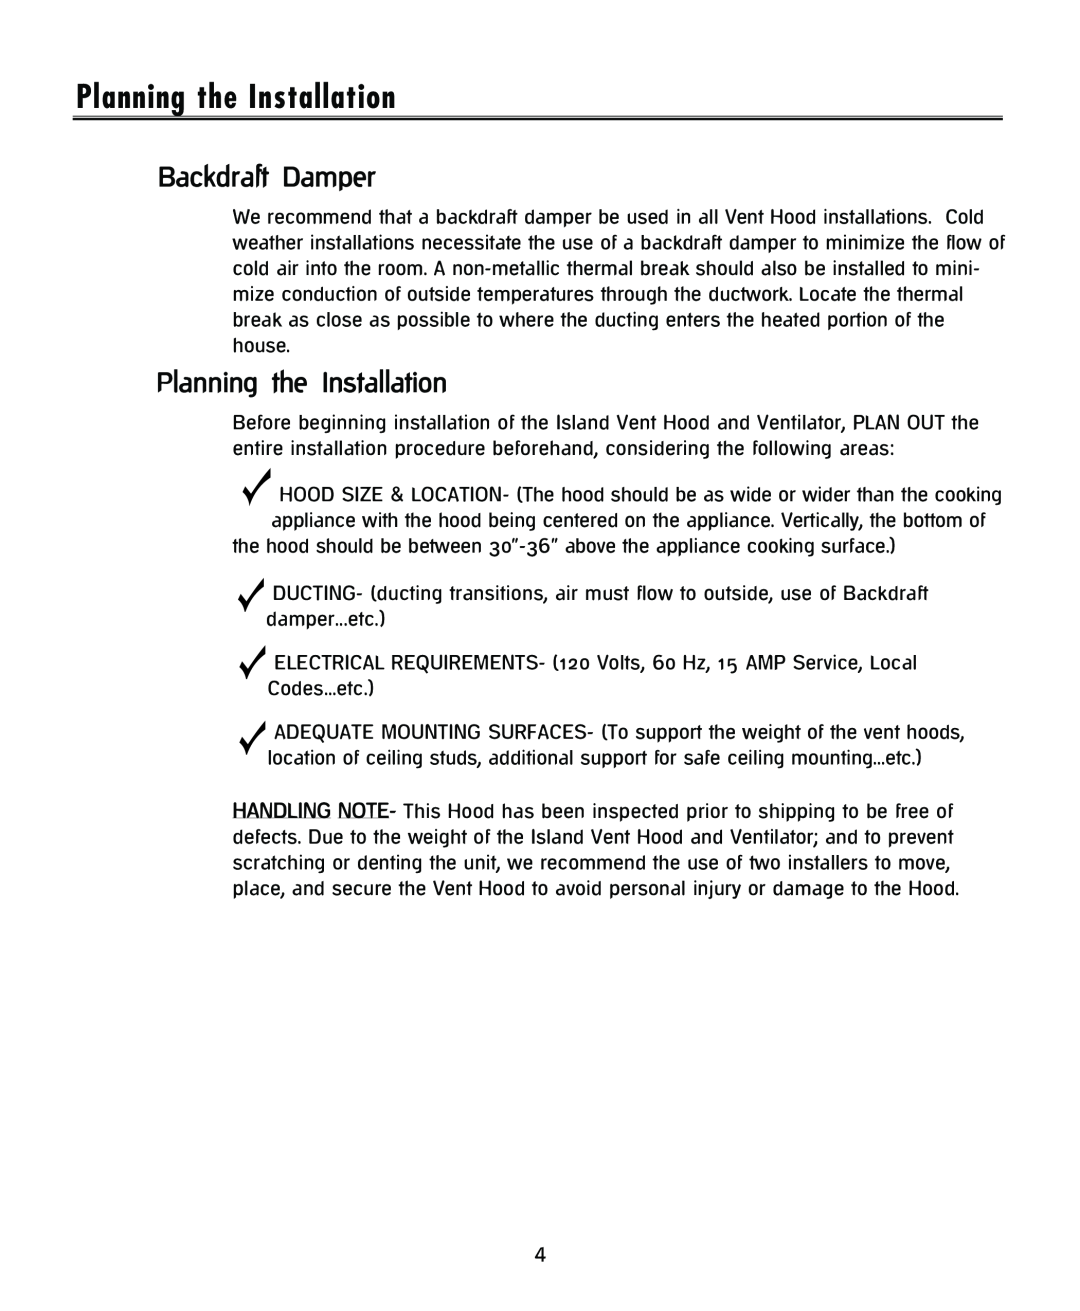 DCS IVH-48 installation instructions Planning the Installation, Backdraft Damper 